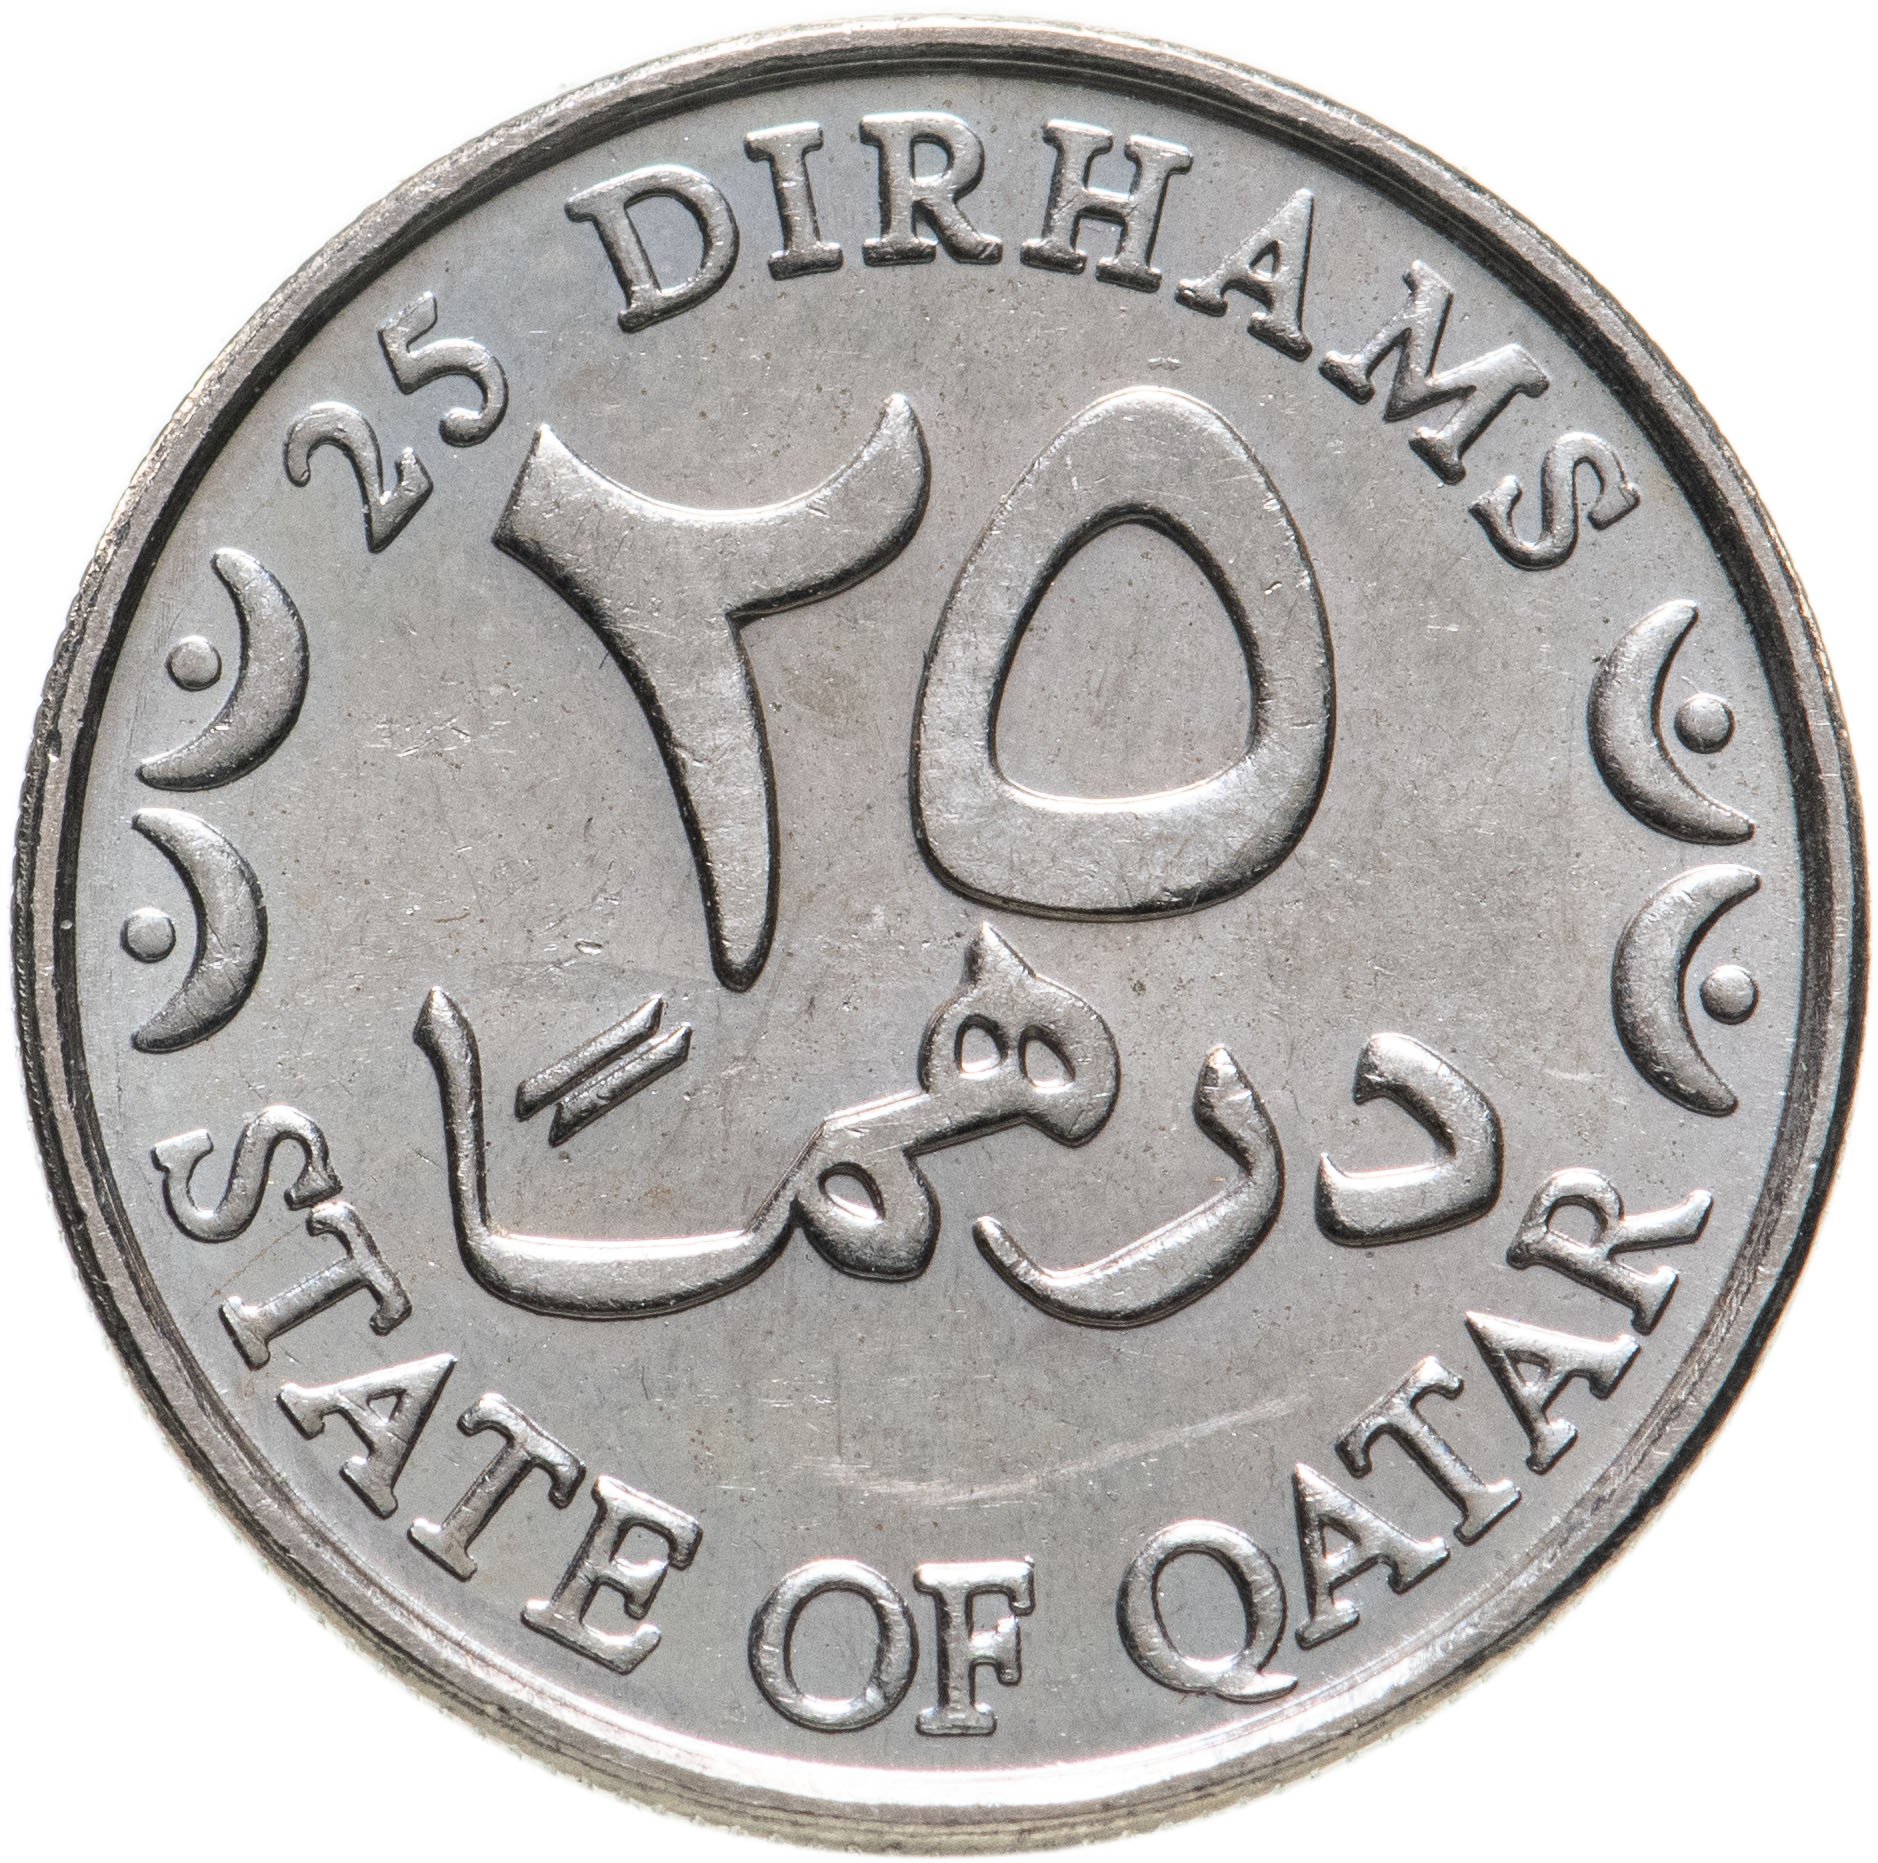 3 дирхама. Номинал дирхамов монет. Арабские дирхамы монеты номинал. 200 Дирхам монета. Три дирхама монета.